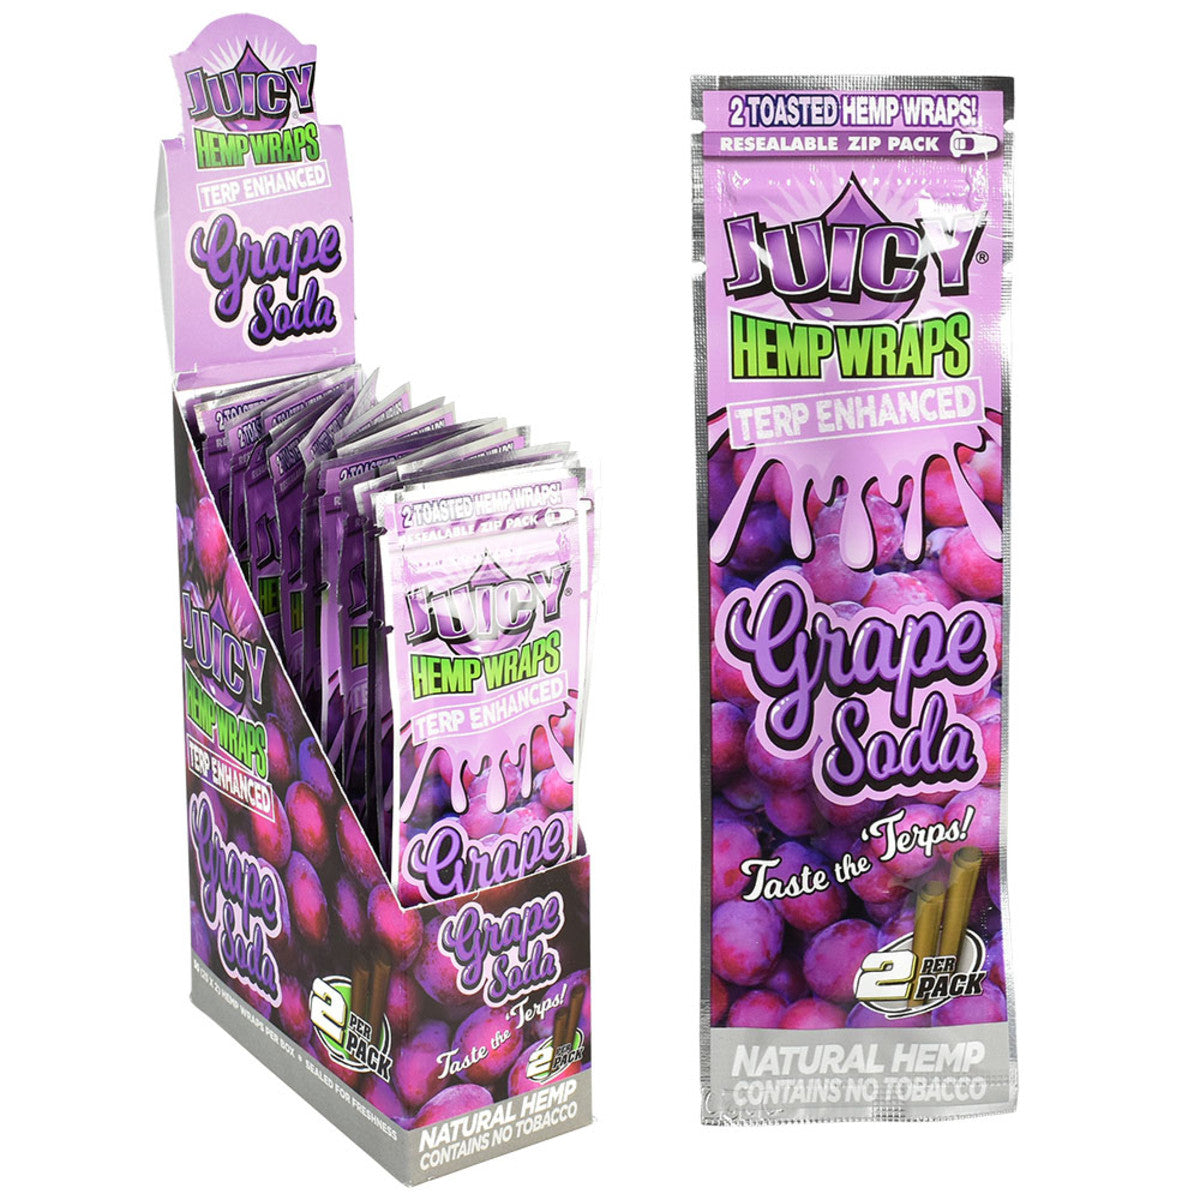 Juicy Hemp Wraps Terp Enhanced Grape Soda Box